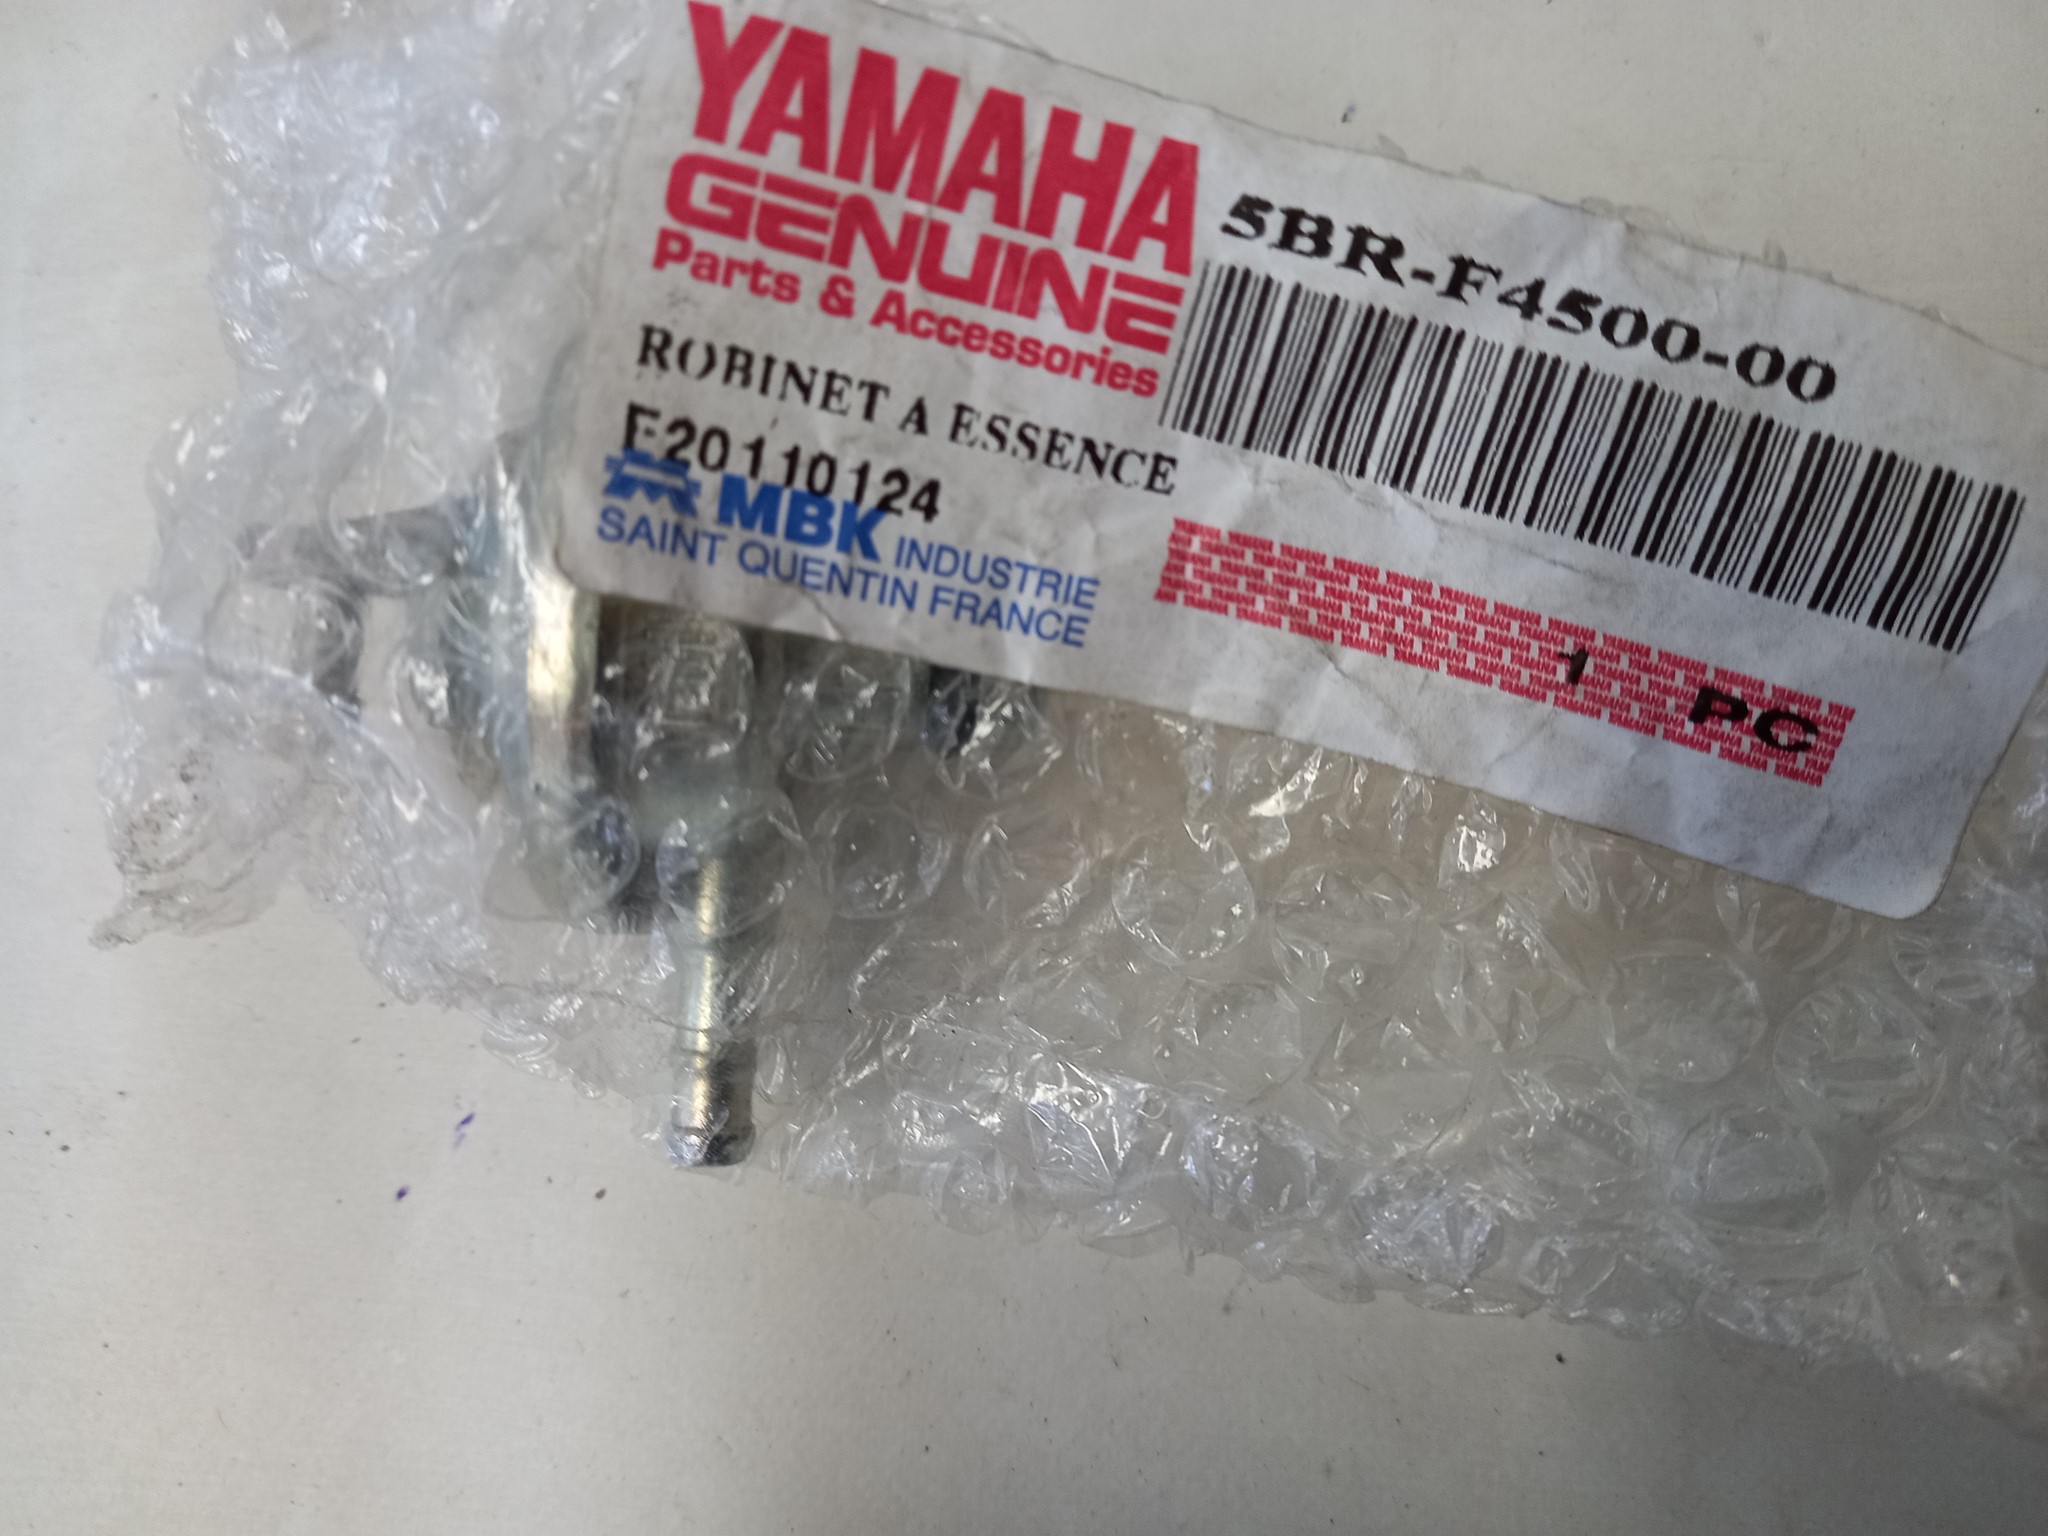 Picture of Yamaha  Benzinhahn  5BR-F4500-00